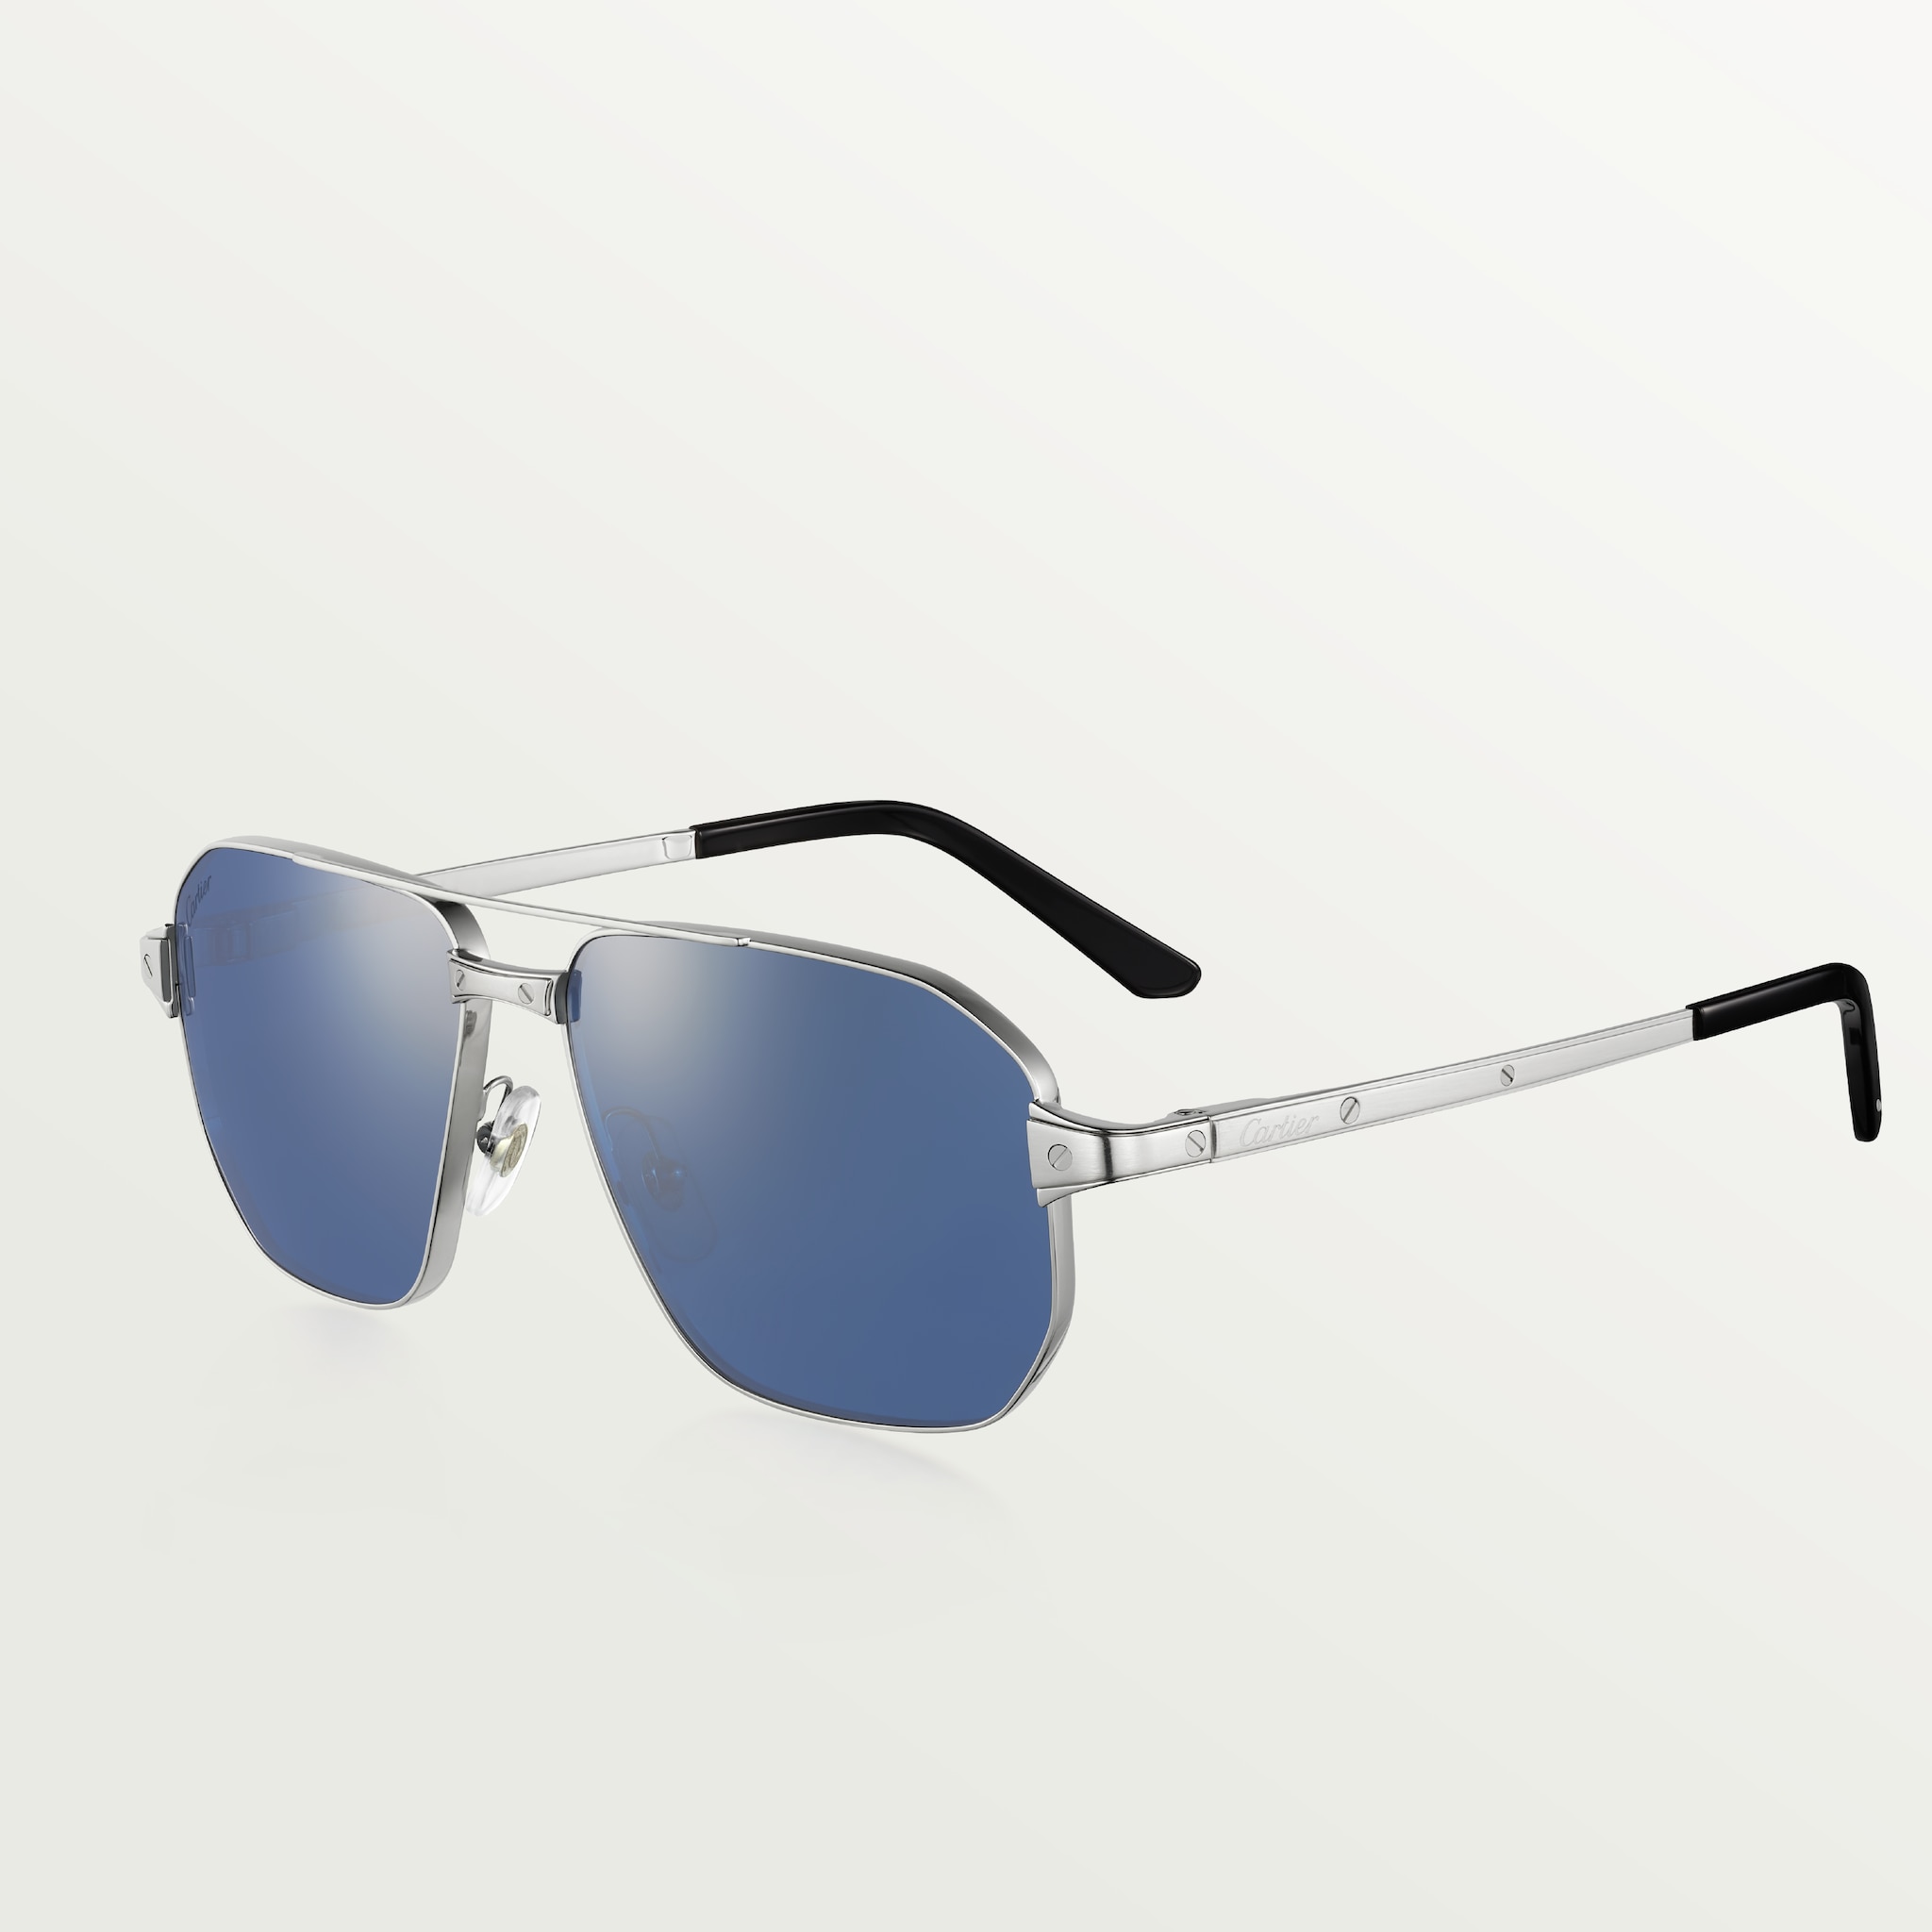 Santos de Cartier SunglassesSmooth platinum-finish metal, blue lenses